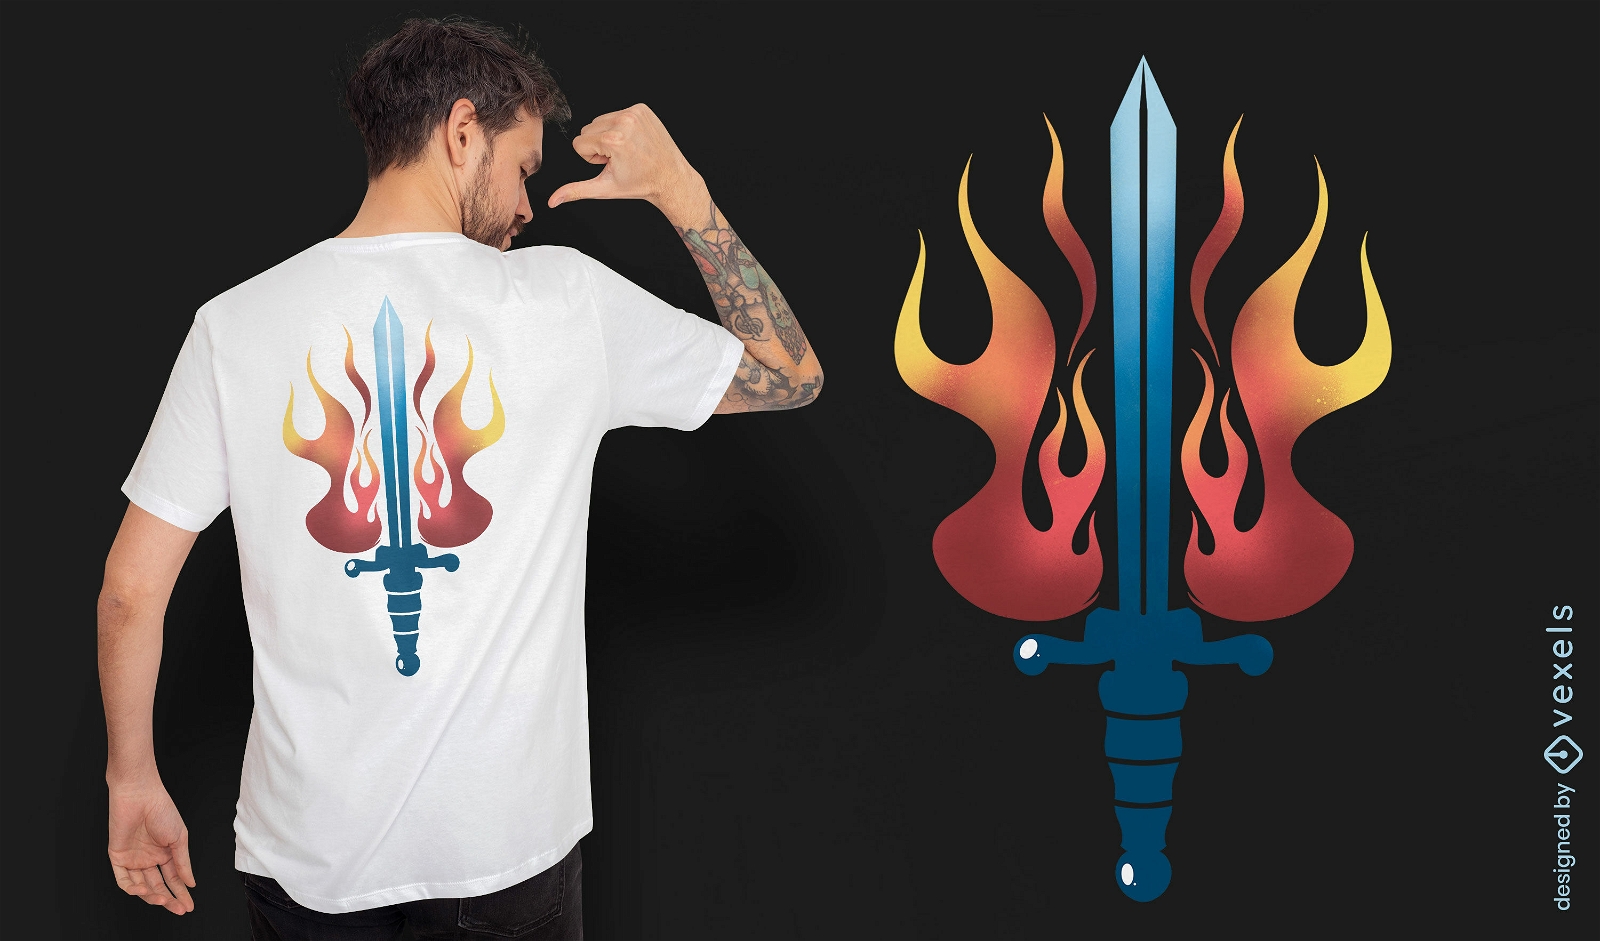 Fantasy sword on fire t-shirt design